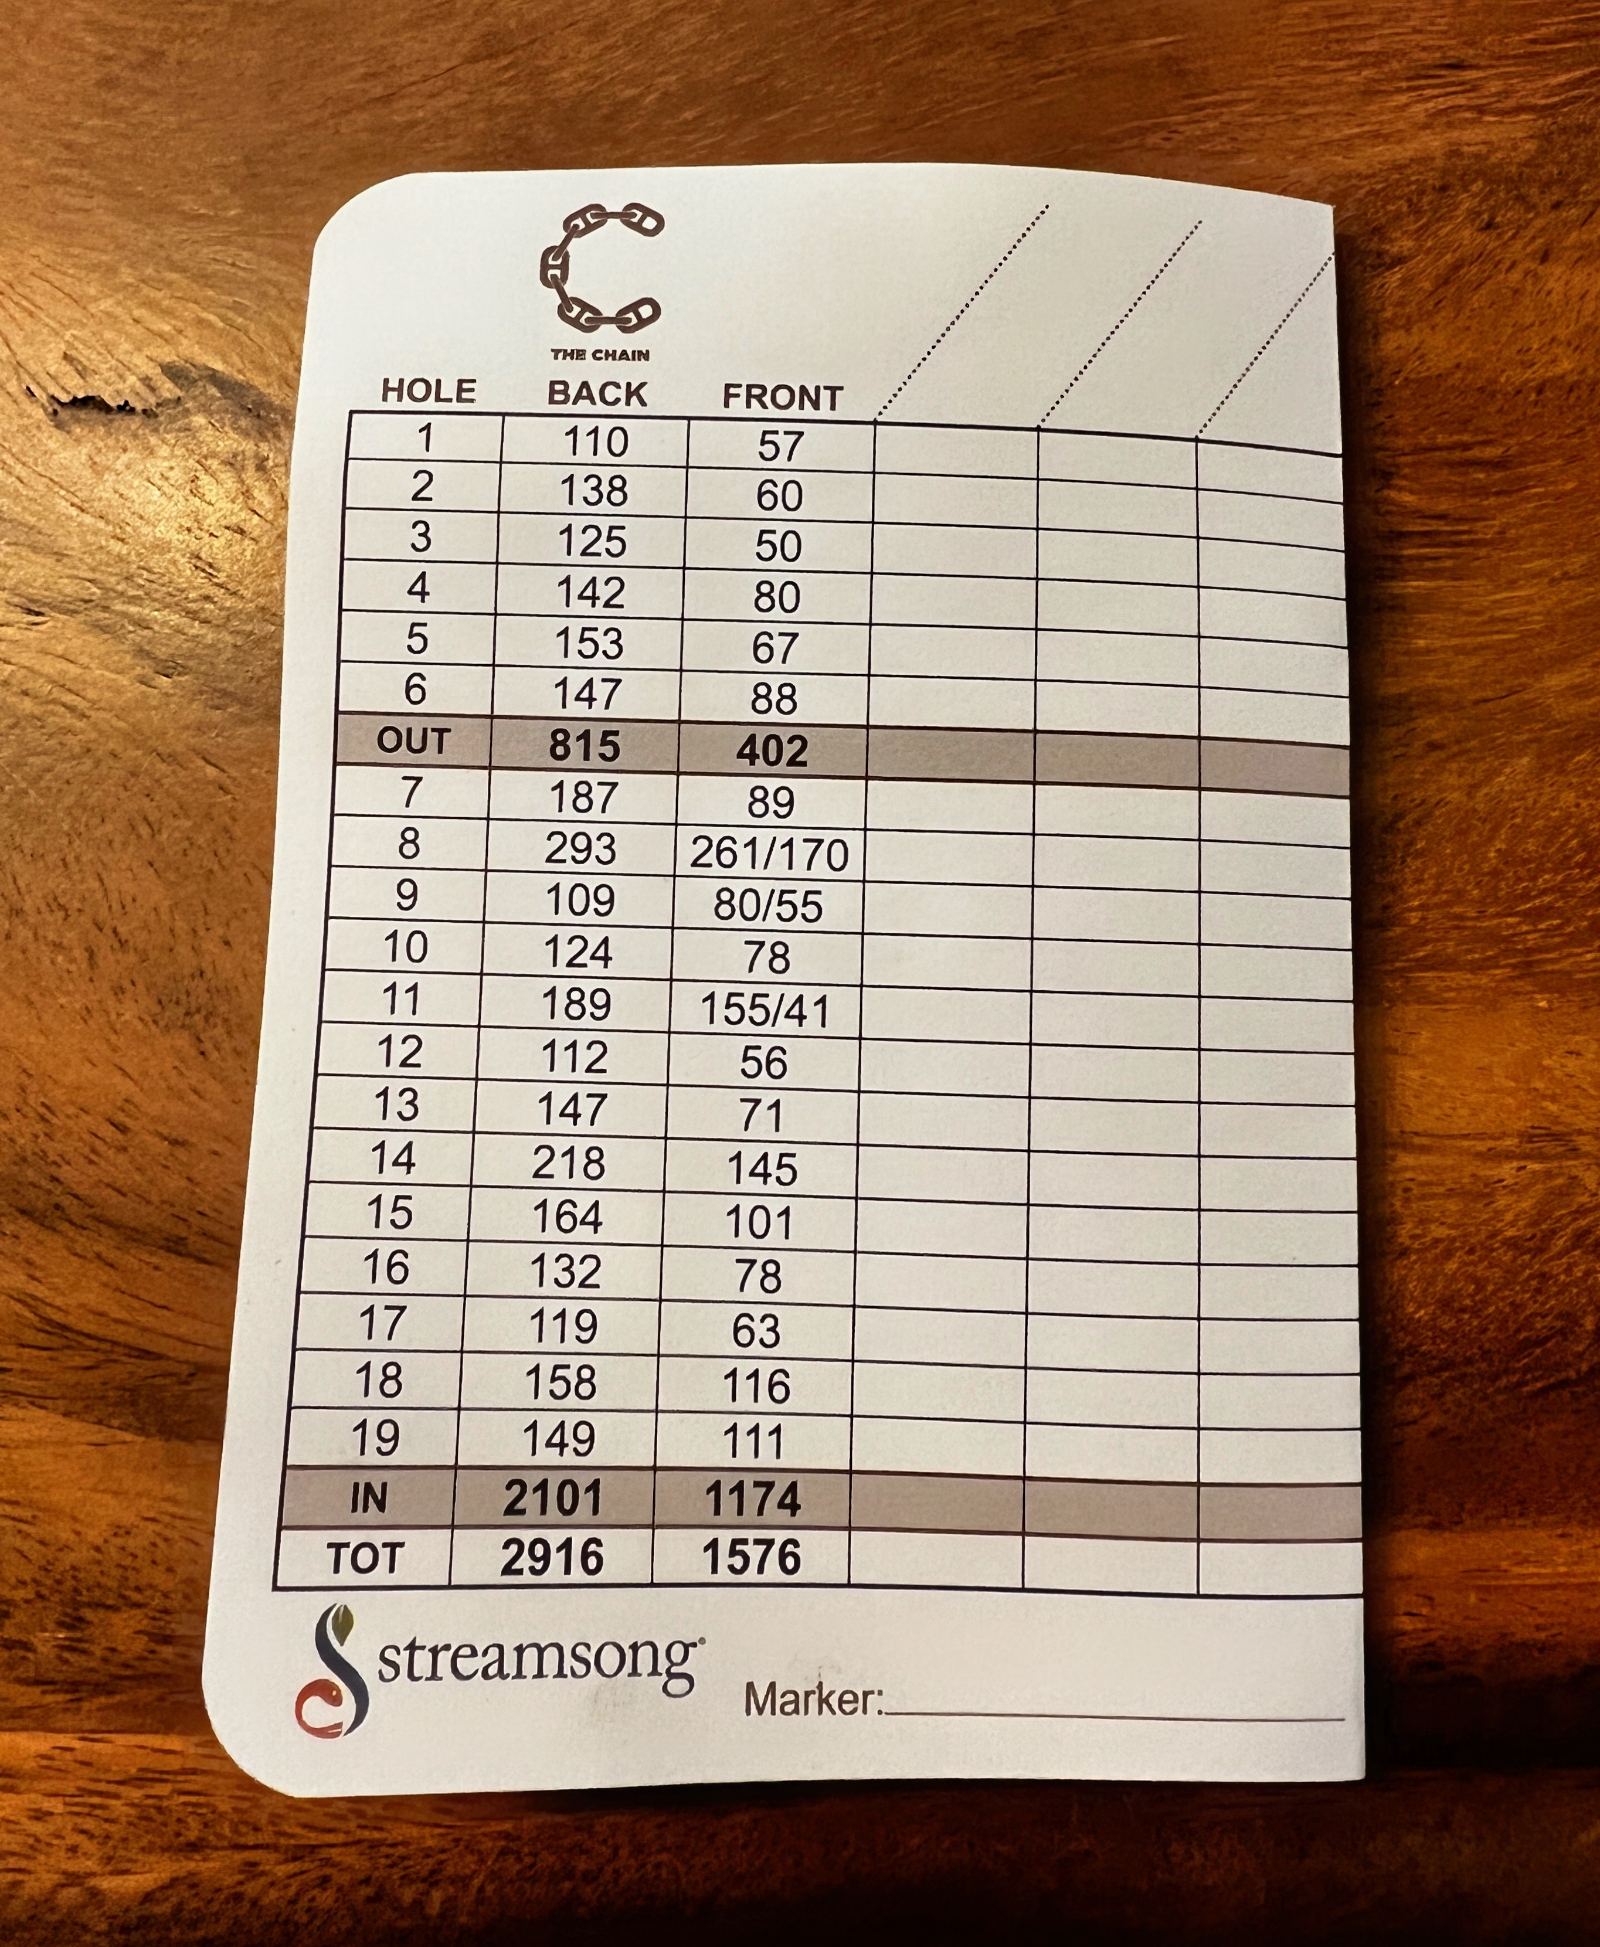 The Chain Streamsong scorecard